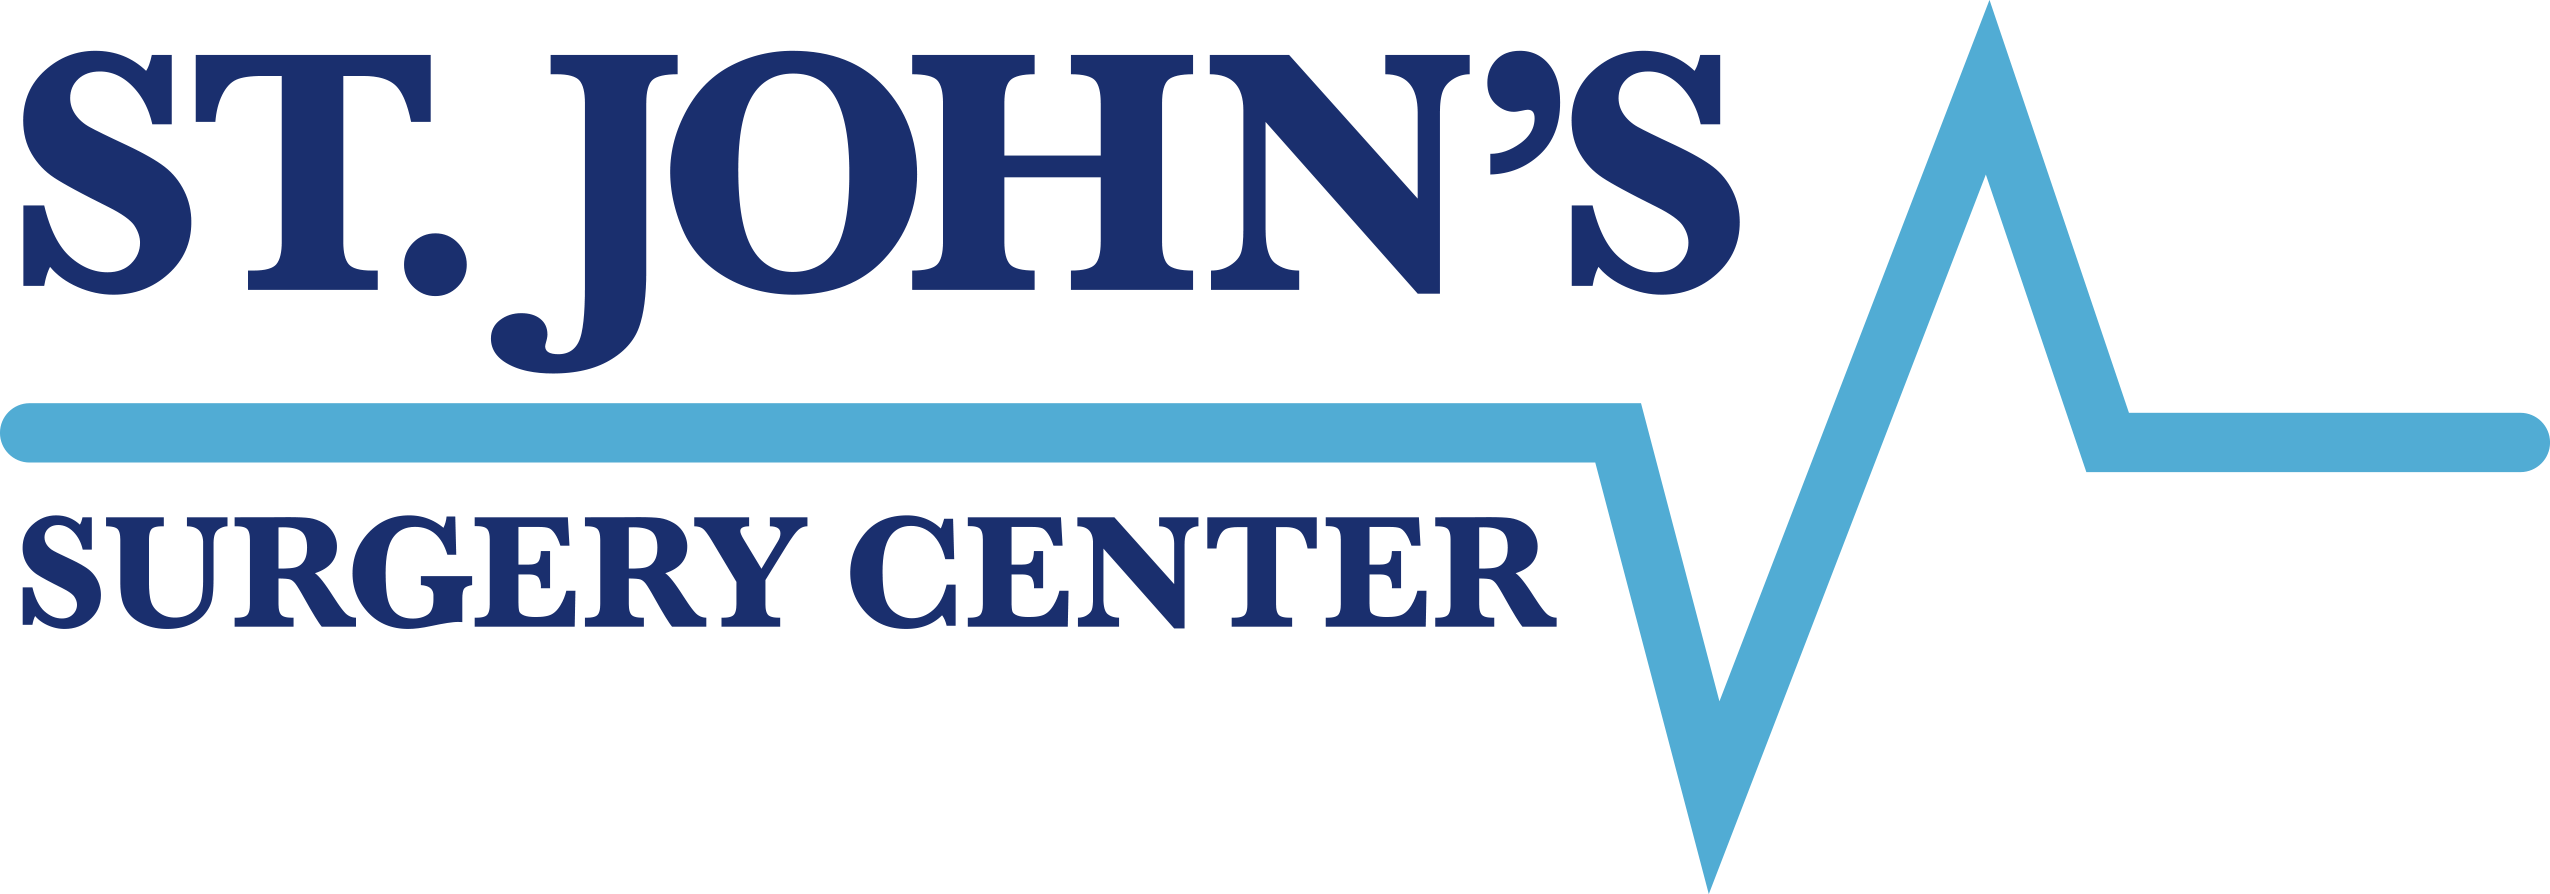 St johns logo